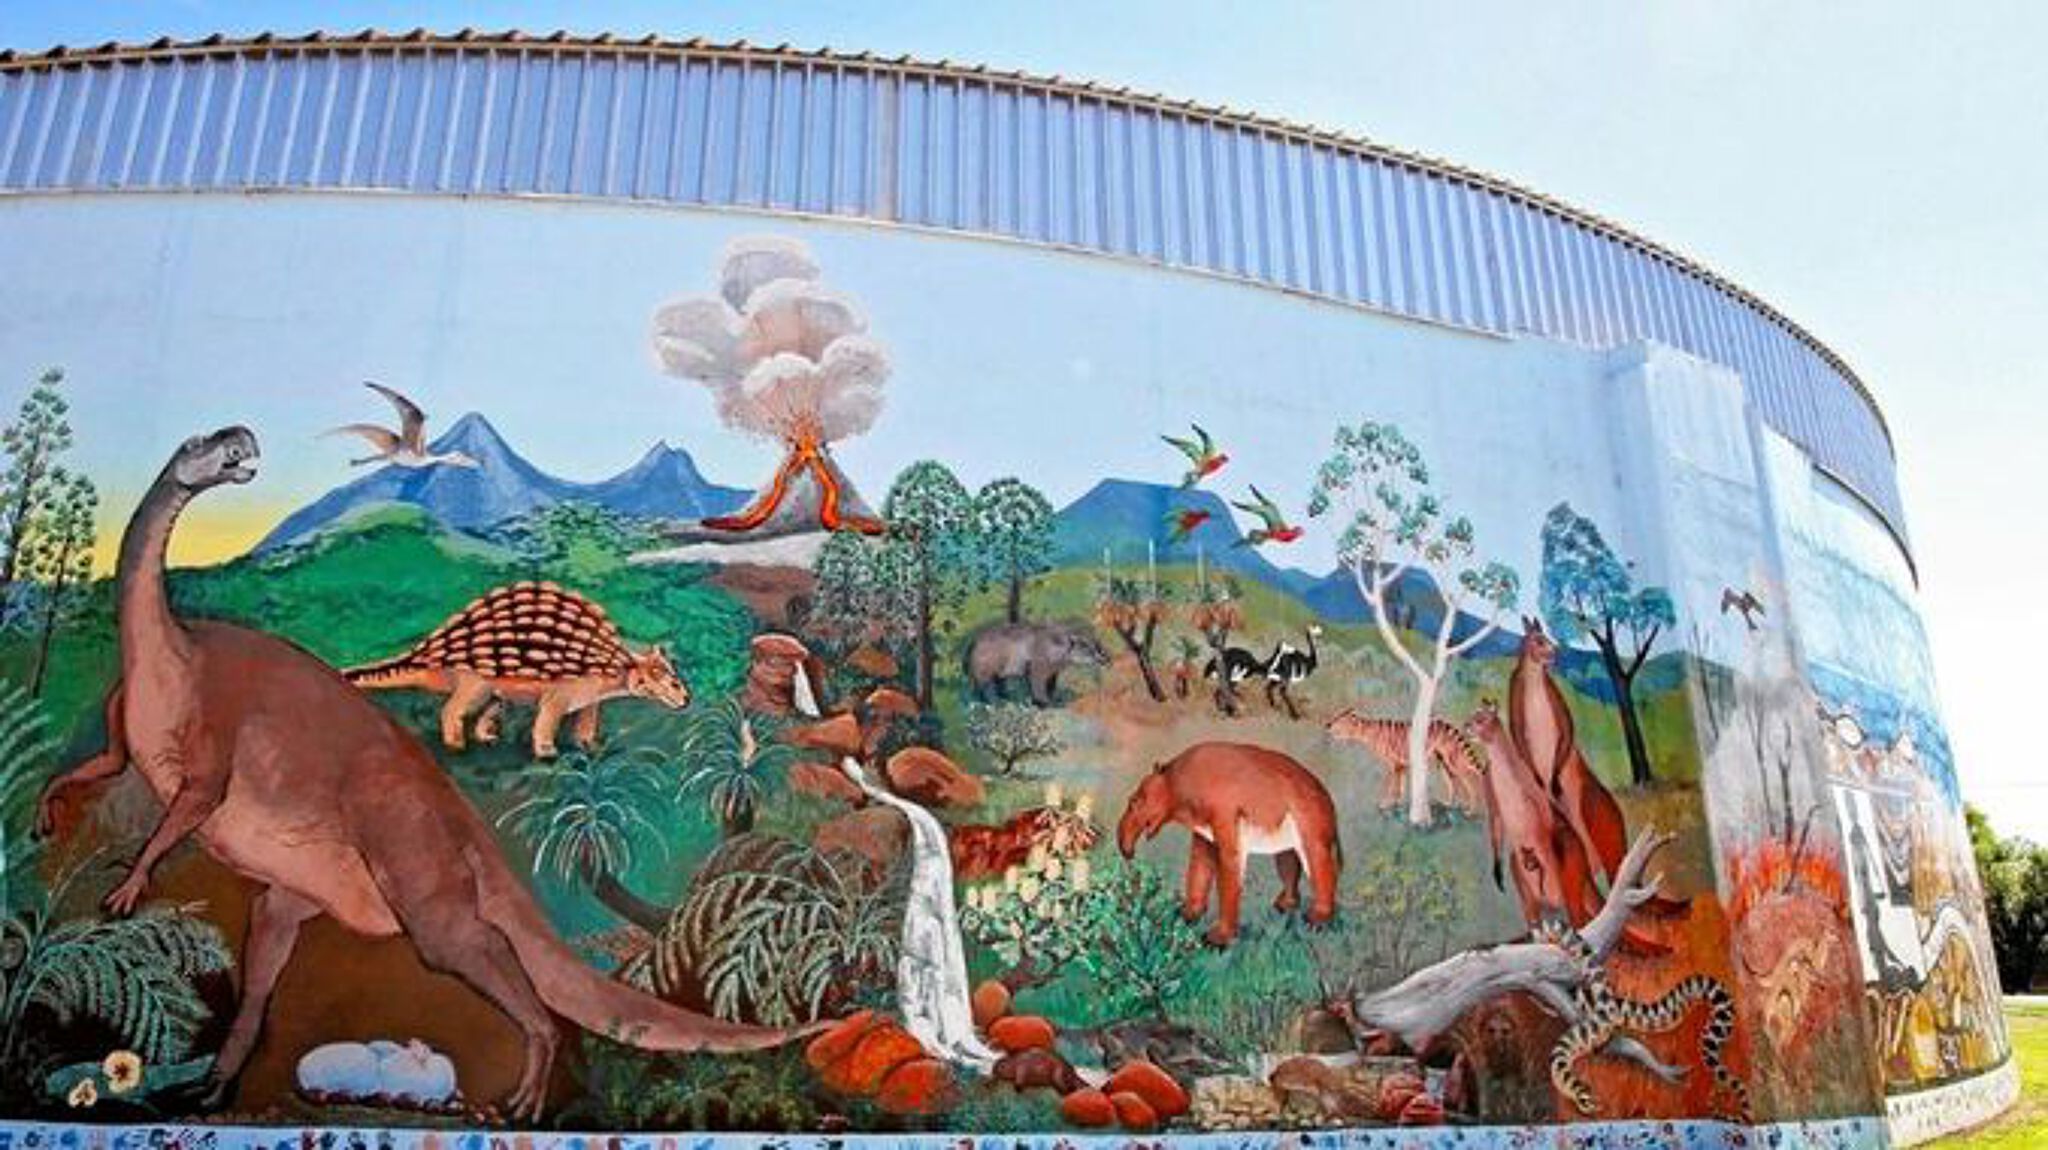 Australian Silo Art Trail&mdash; Biloela Water Tank Art - Spirit of the Land